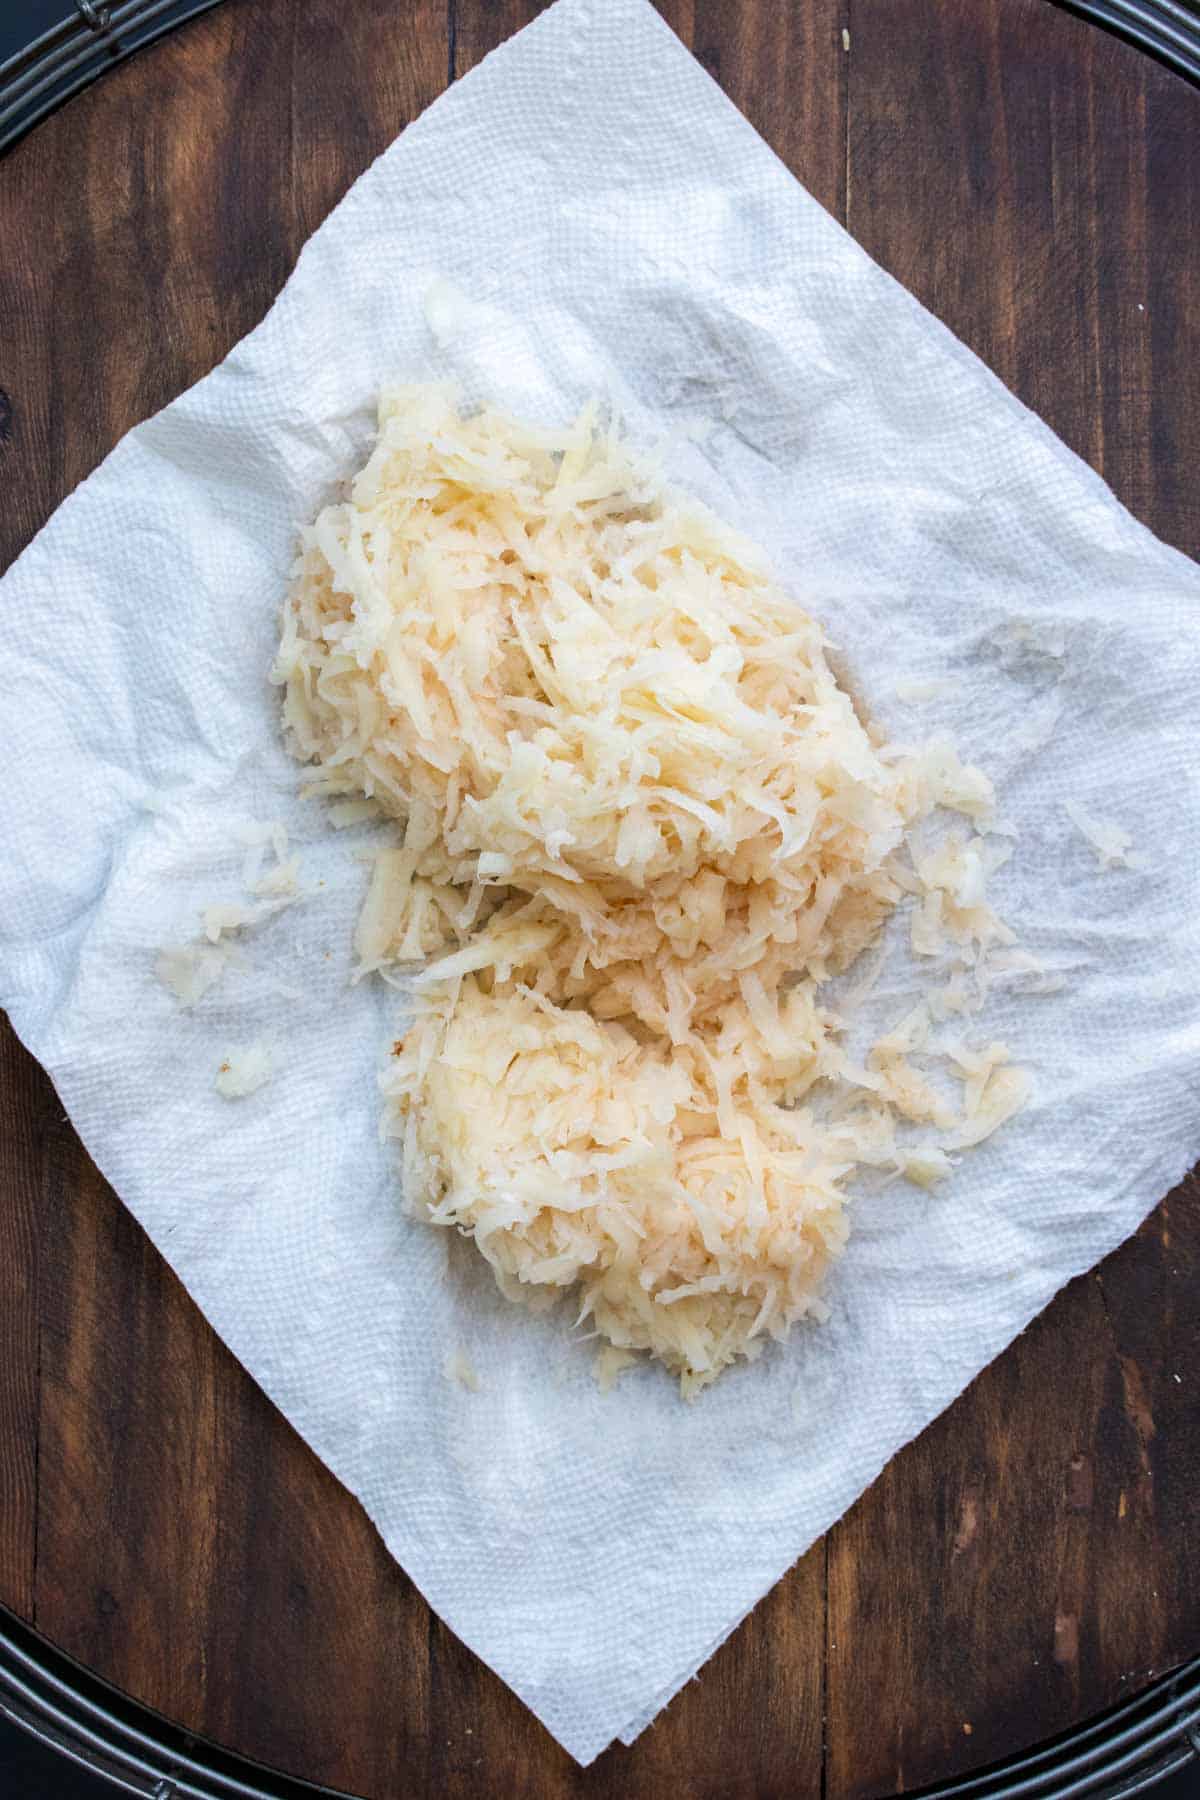 Shredded potato on a kitchen towel